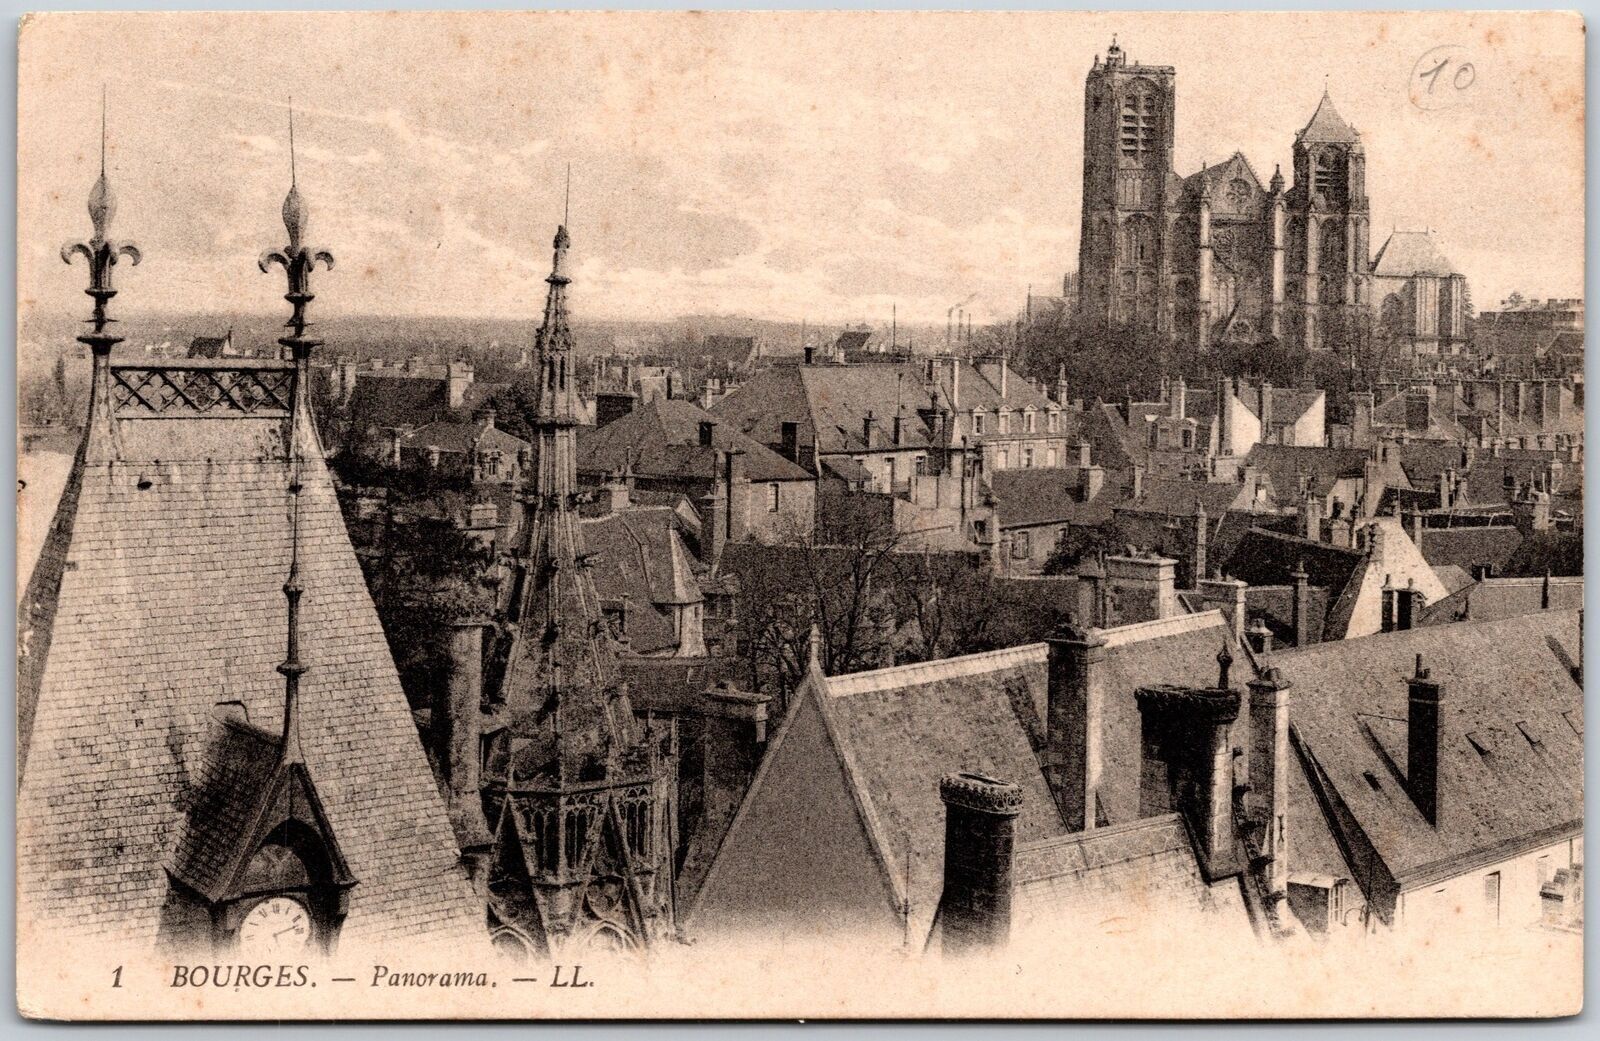 BOURGES - Panorama France Buildings Castles Antique Postcard